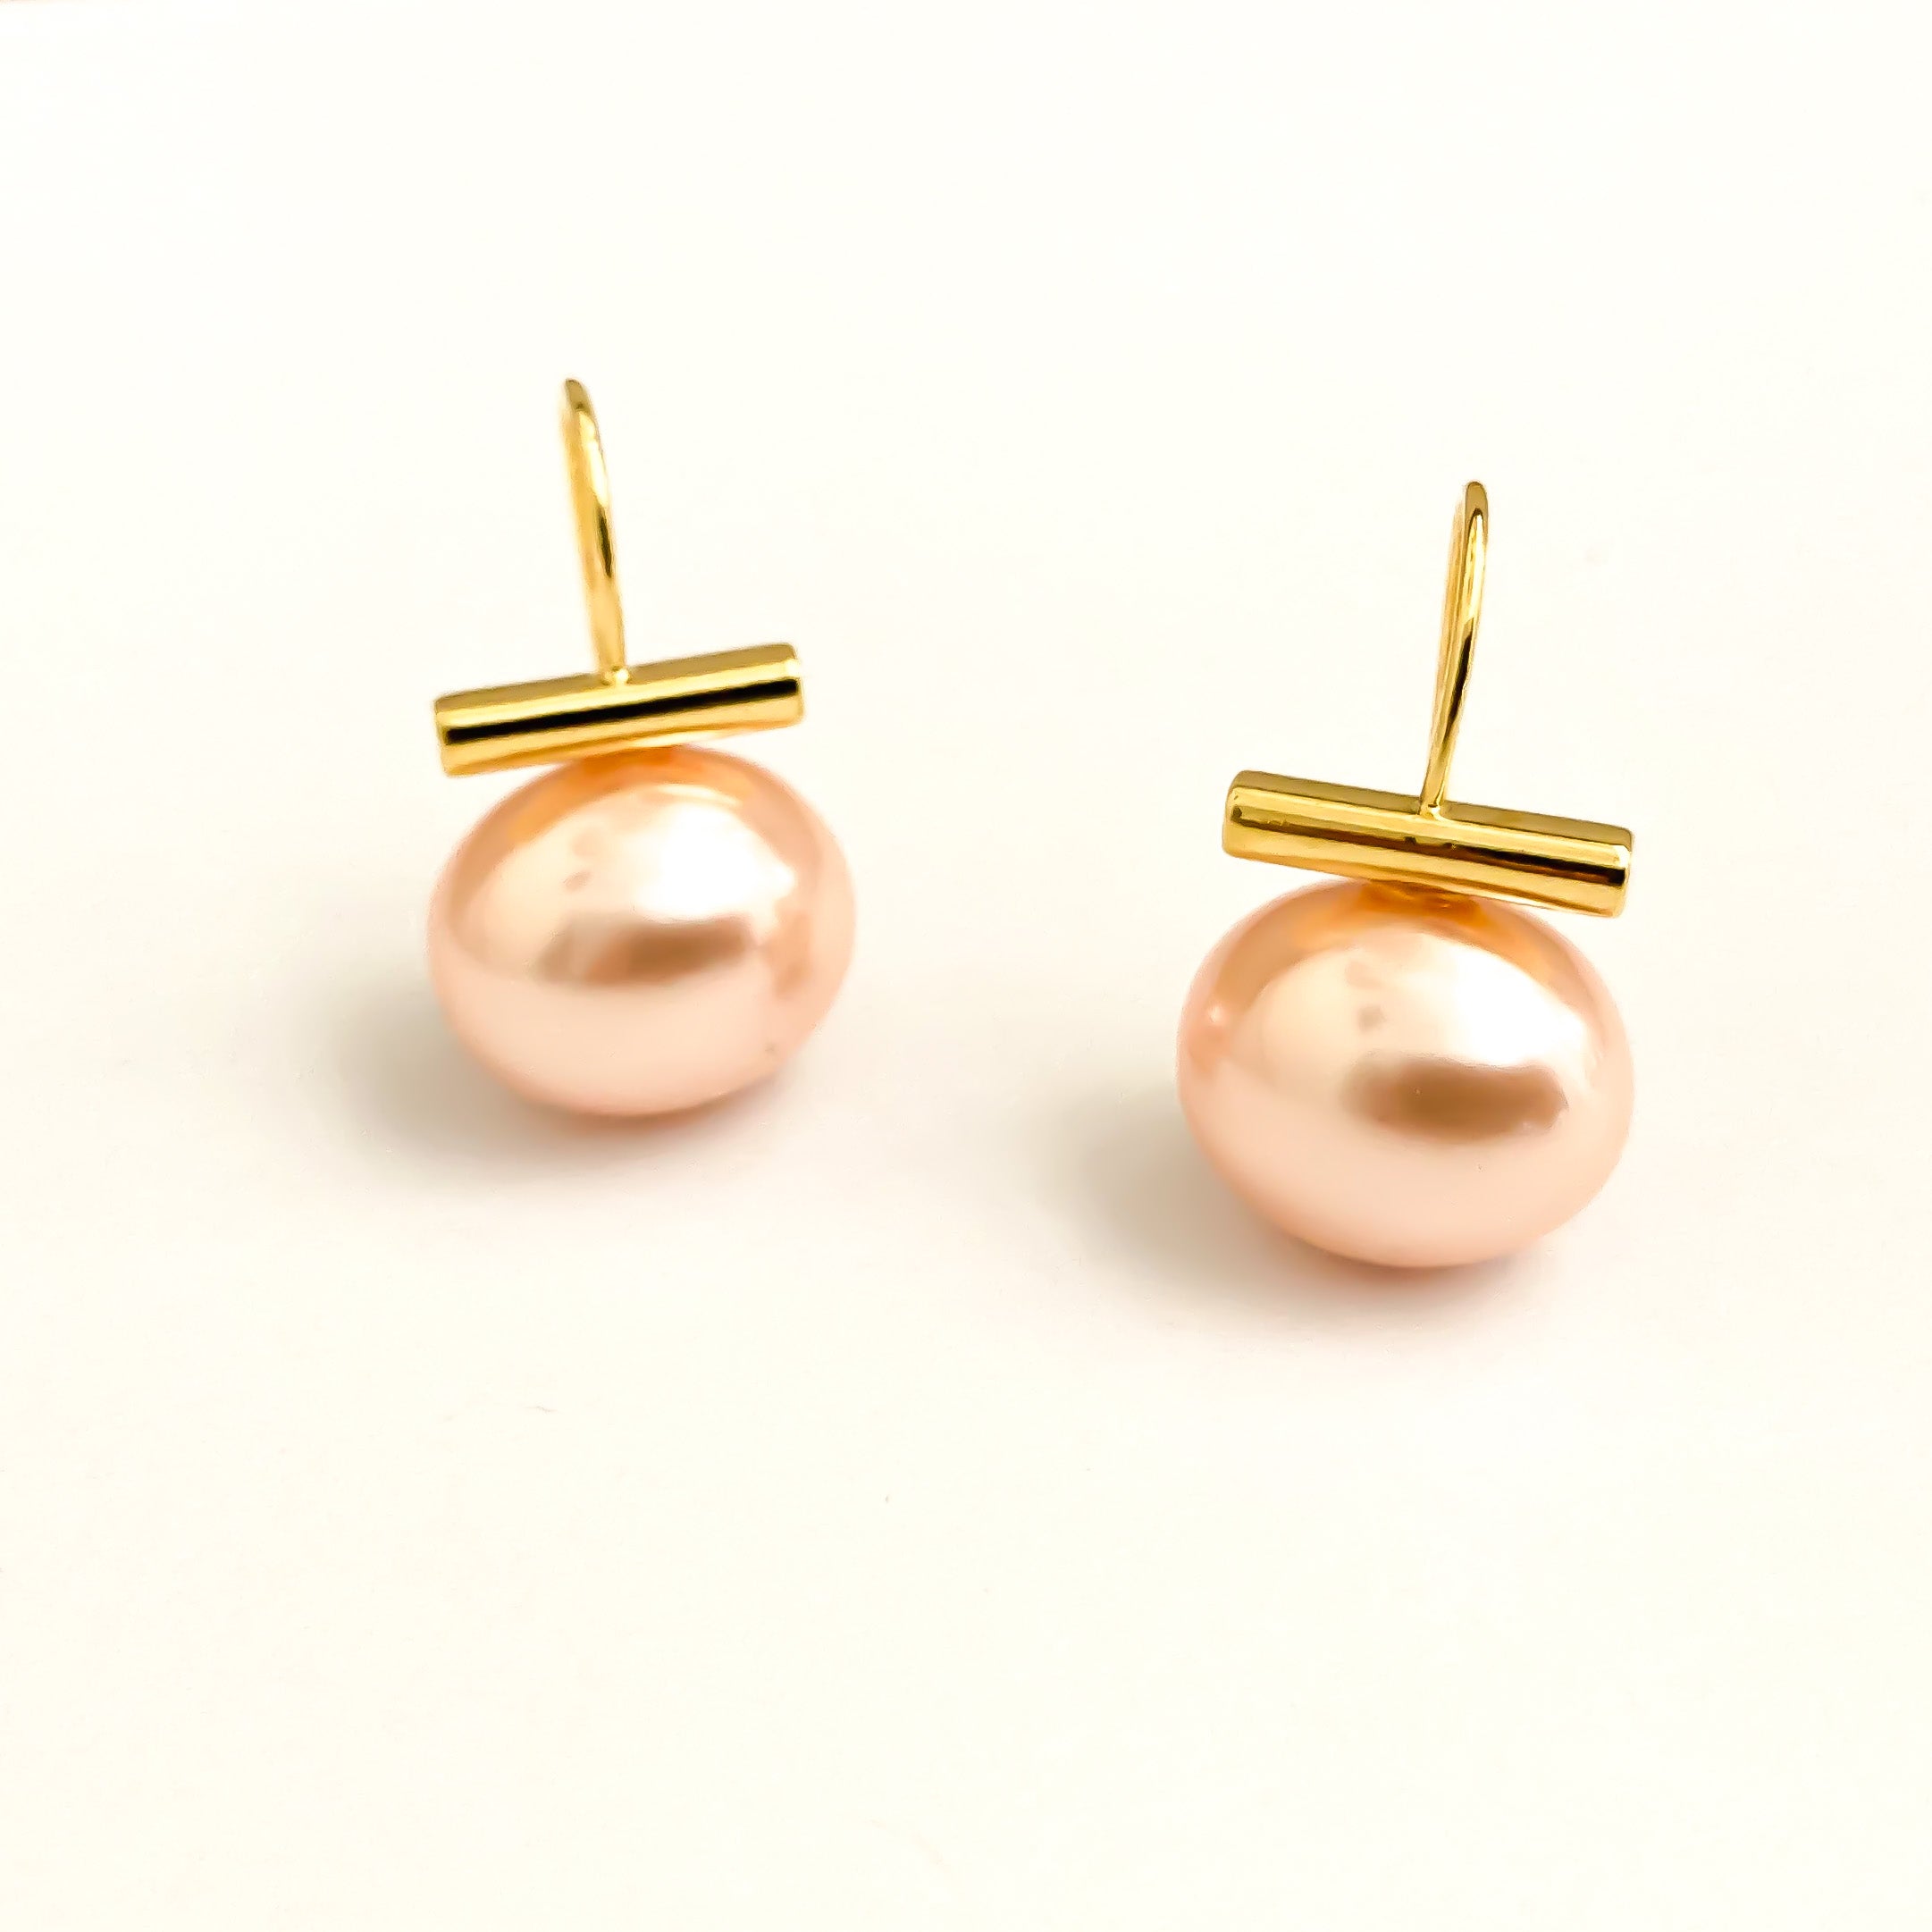 Ohelo Pearl Earrings